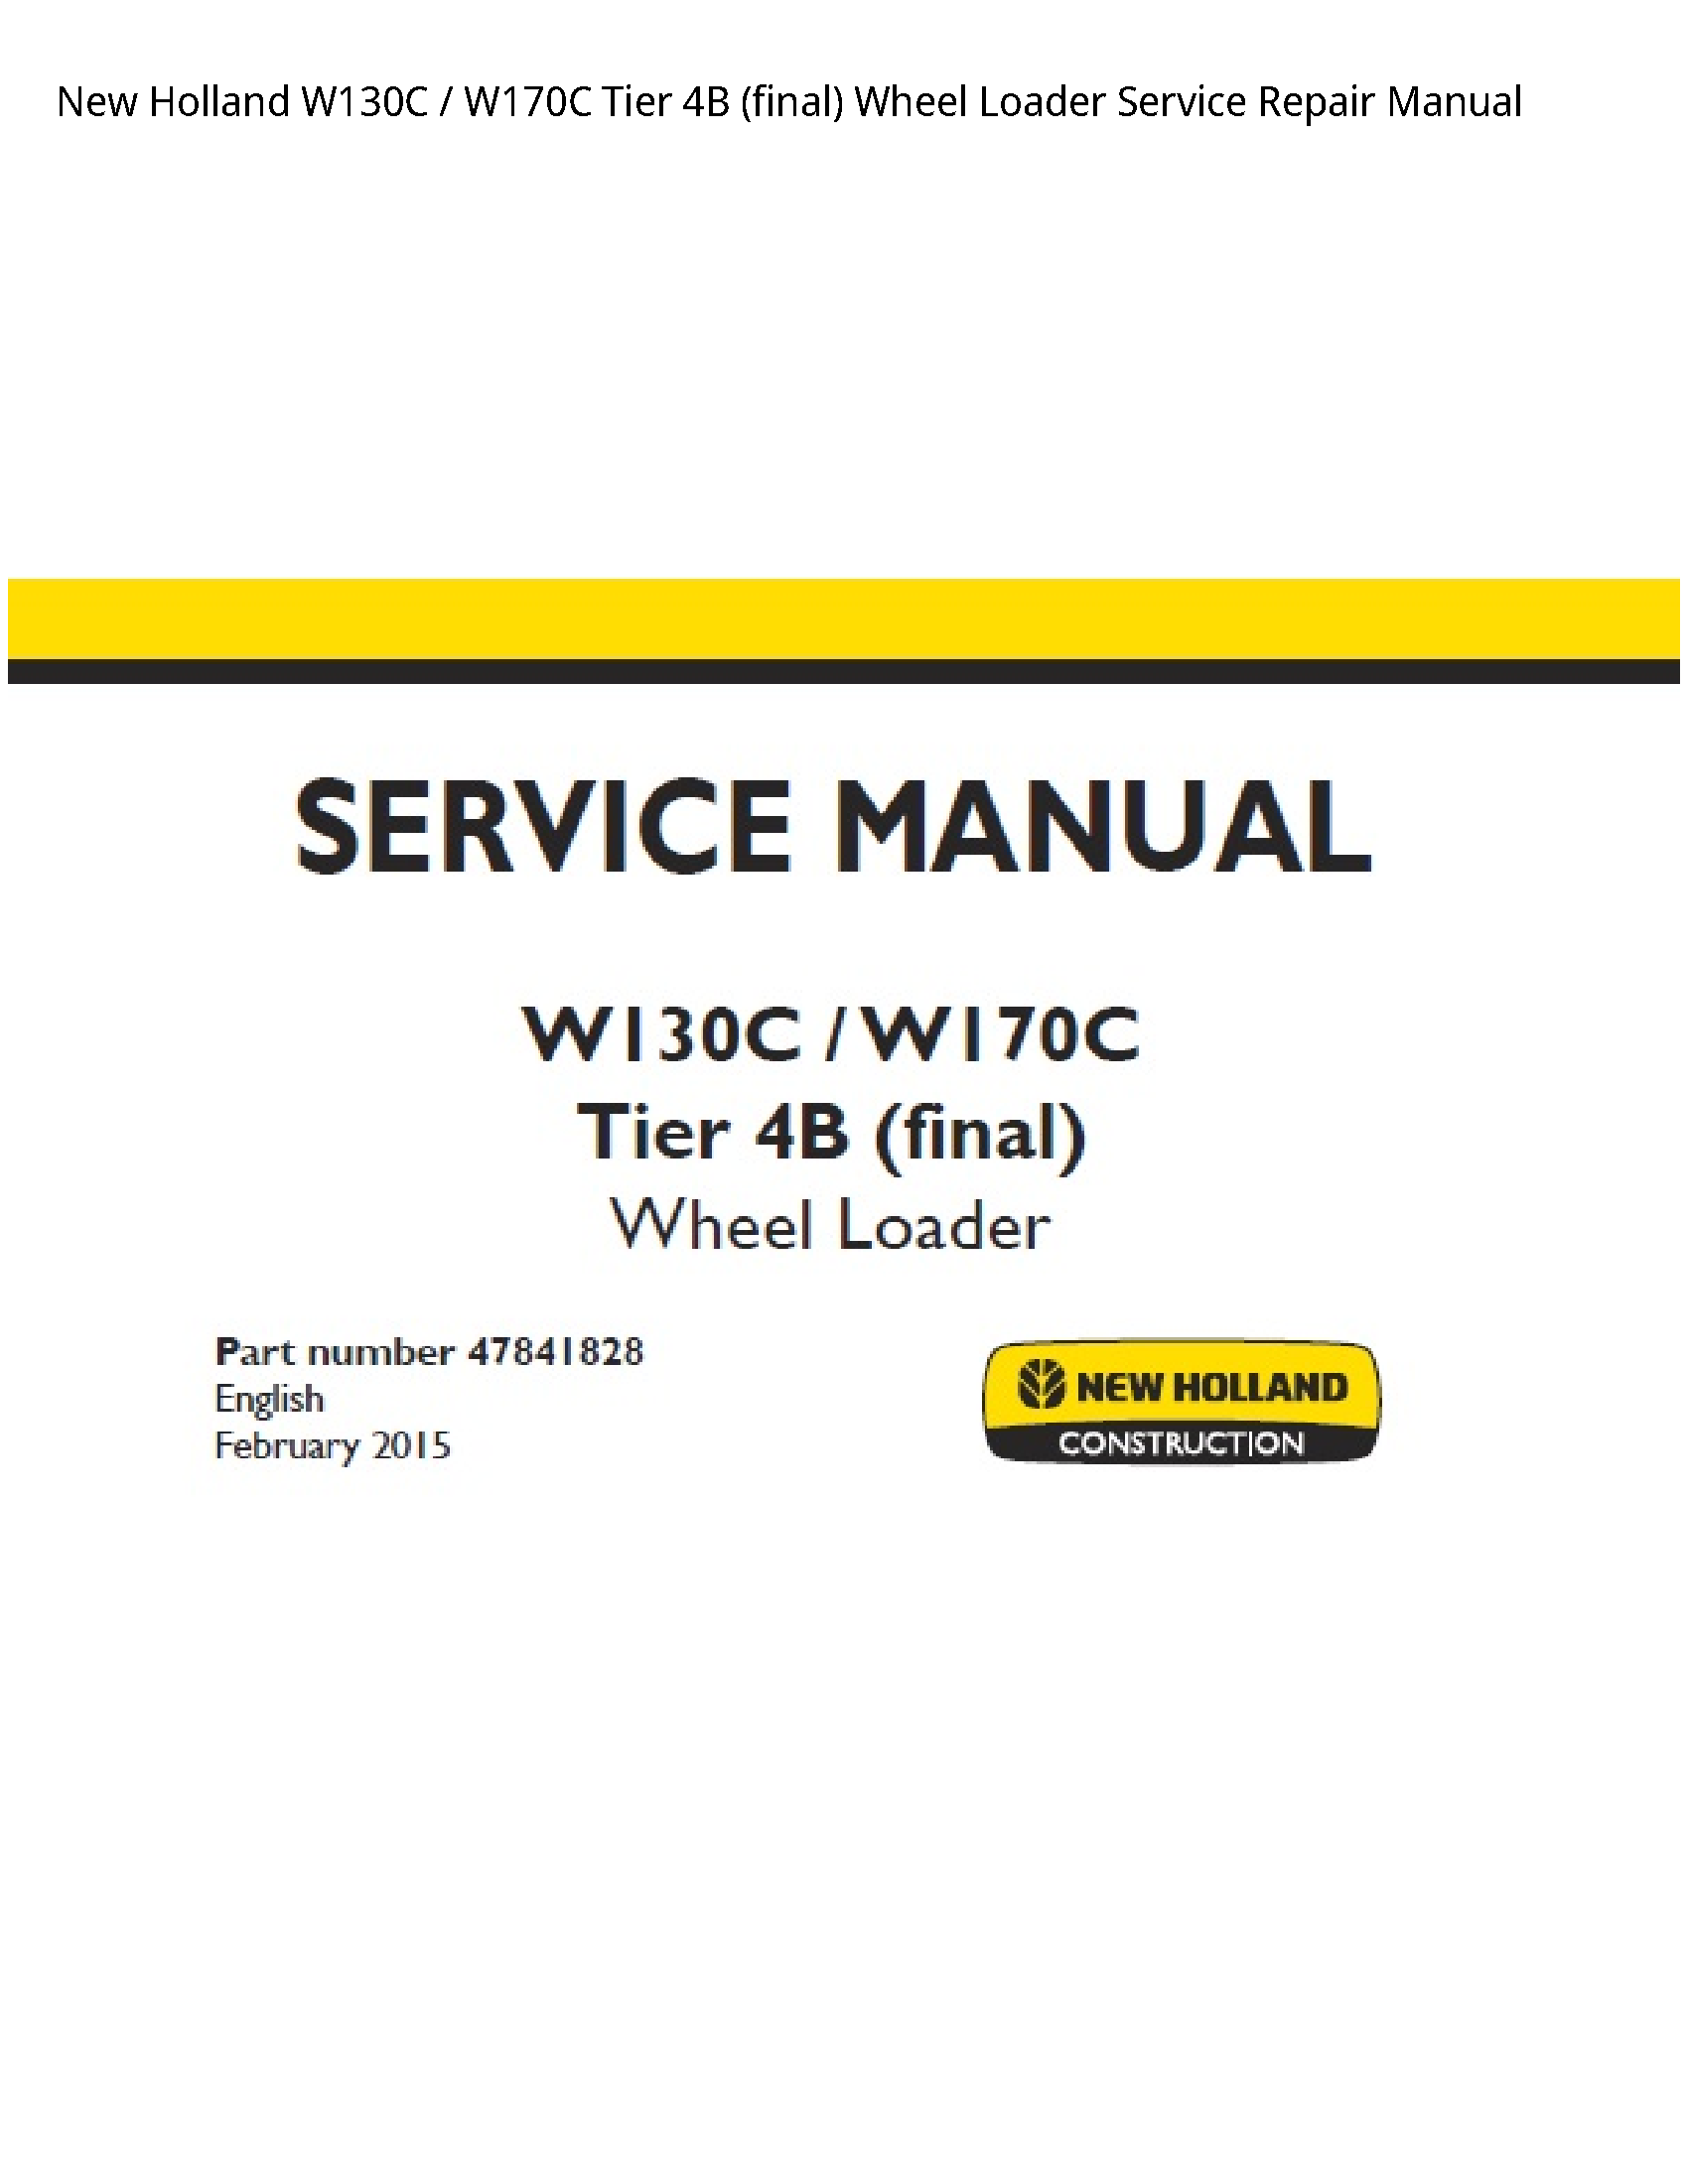 New Holland W130C Tier (final) Wheel Loader manual